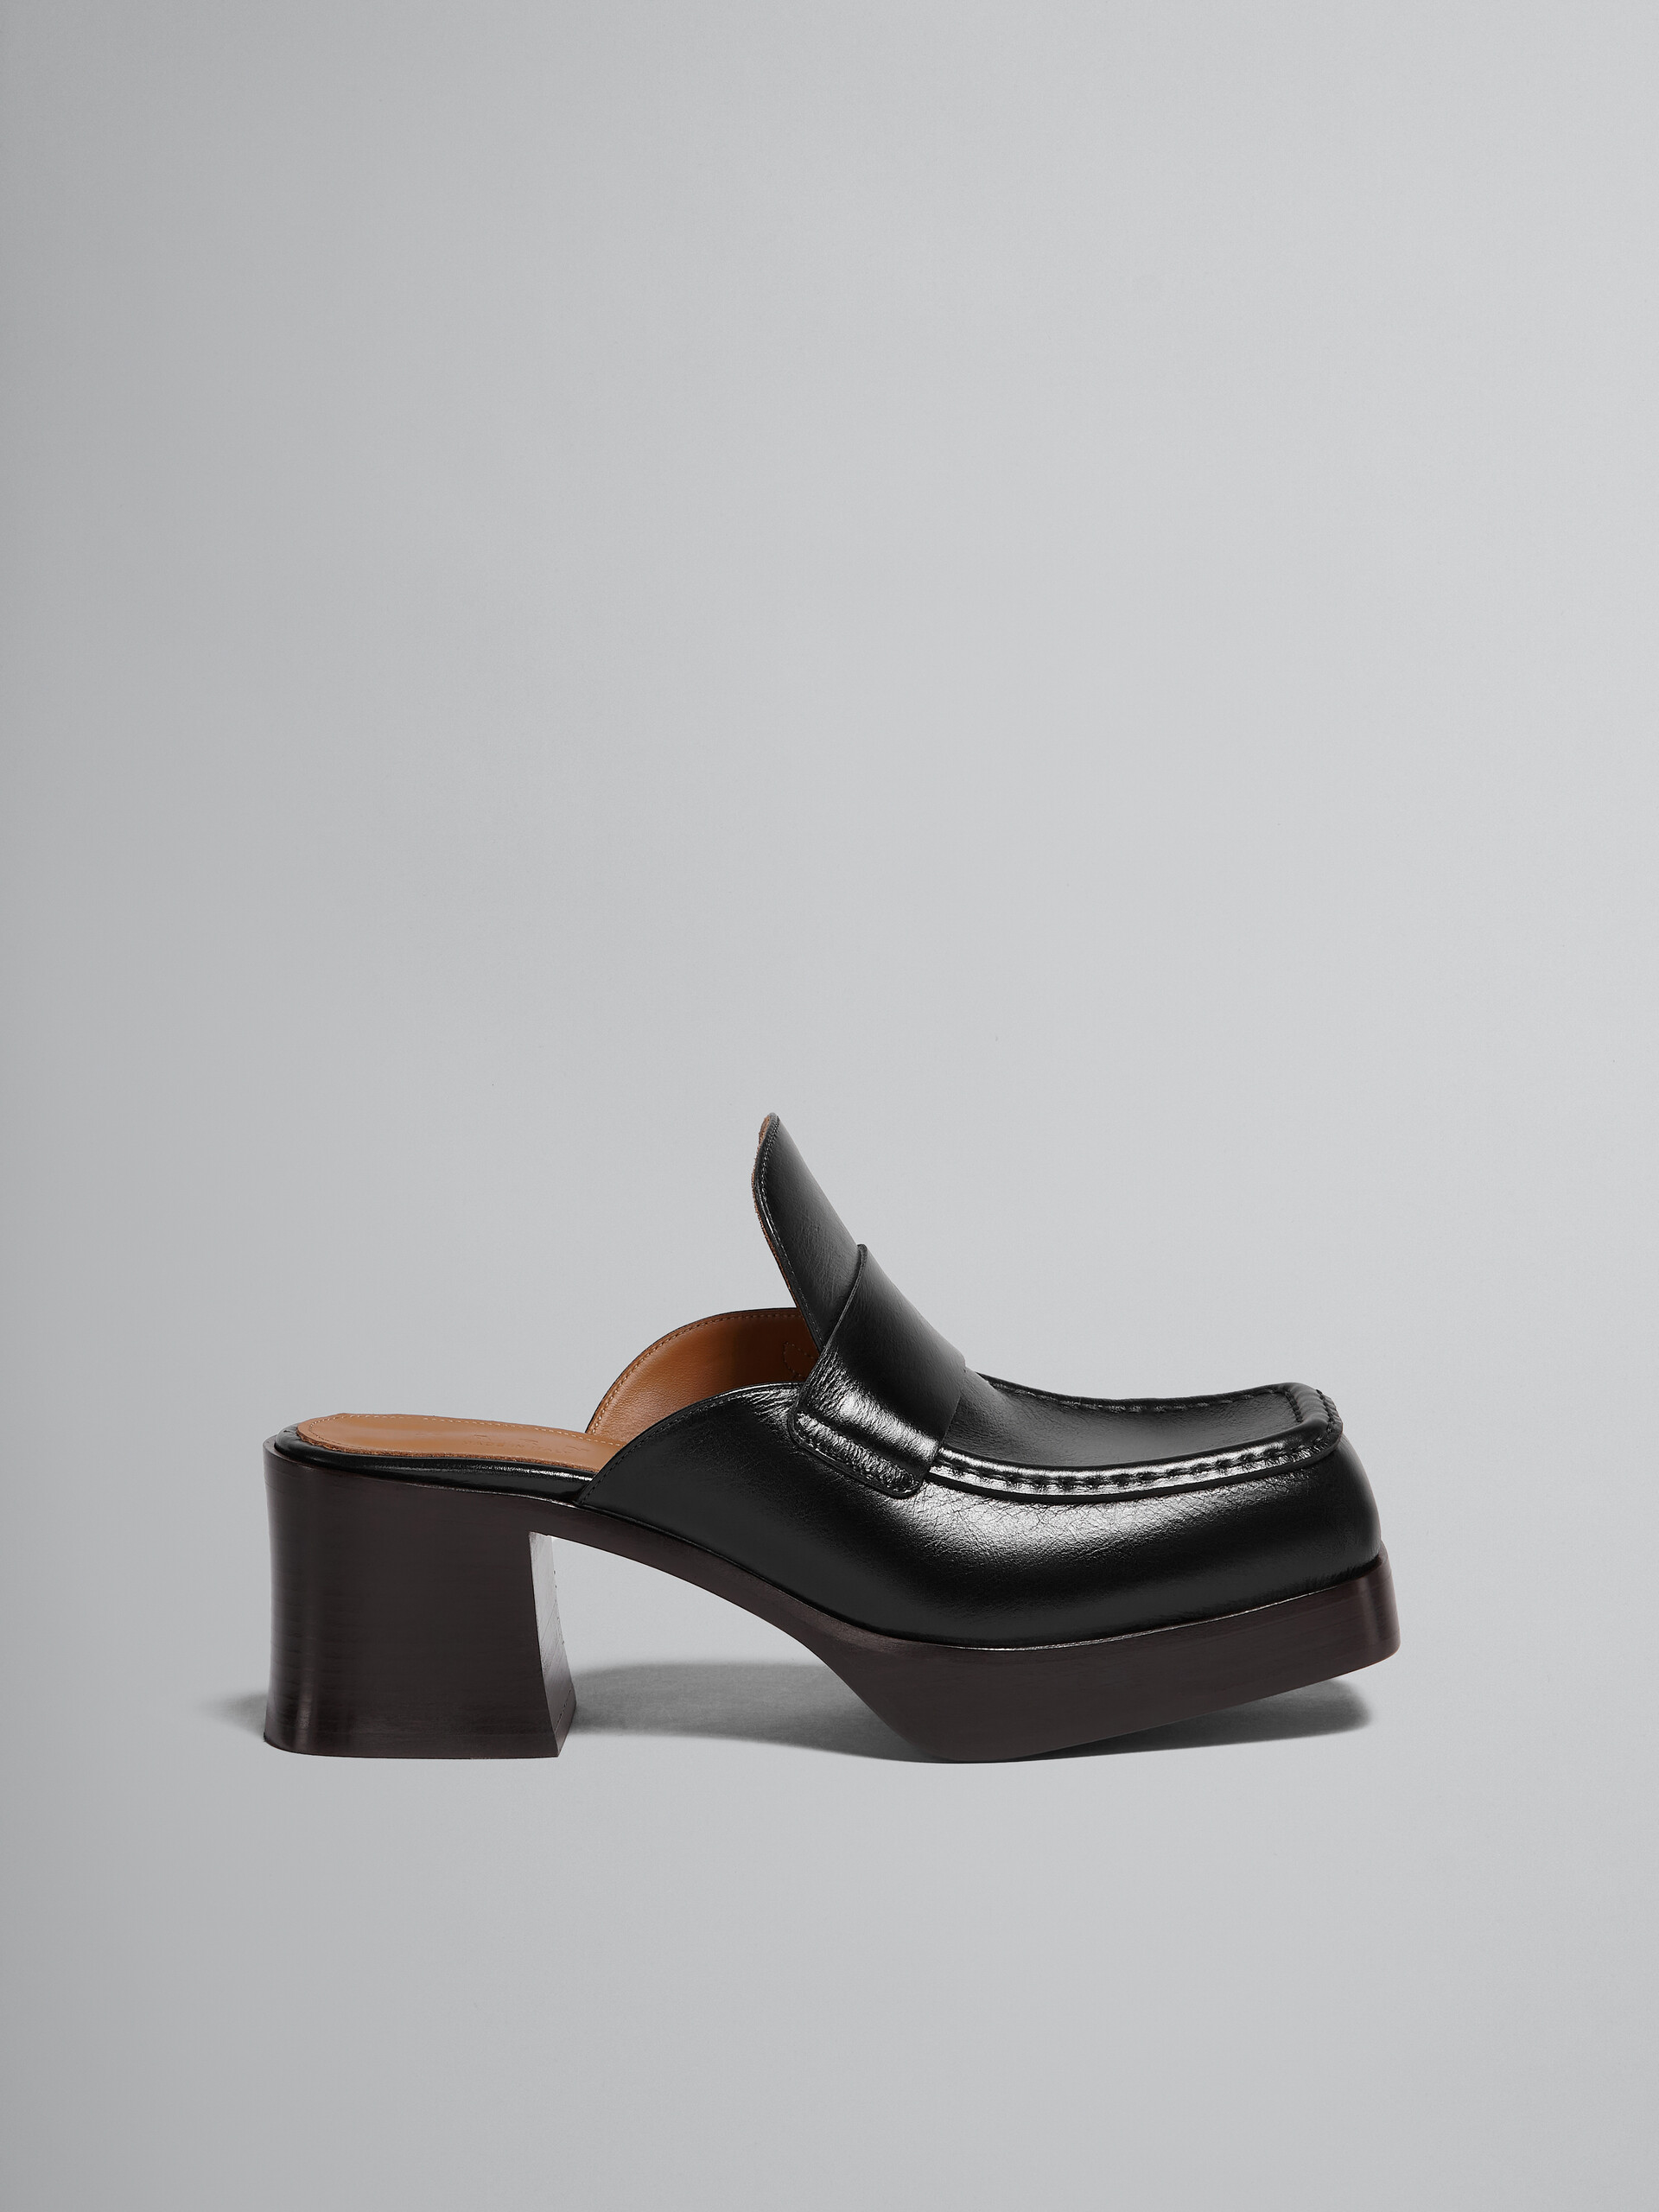 Black leather heeled mule - Clogs - Image 1